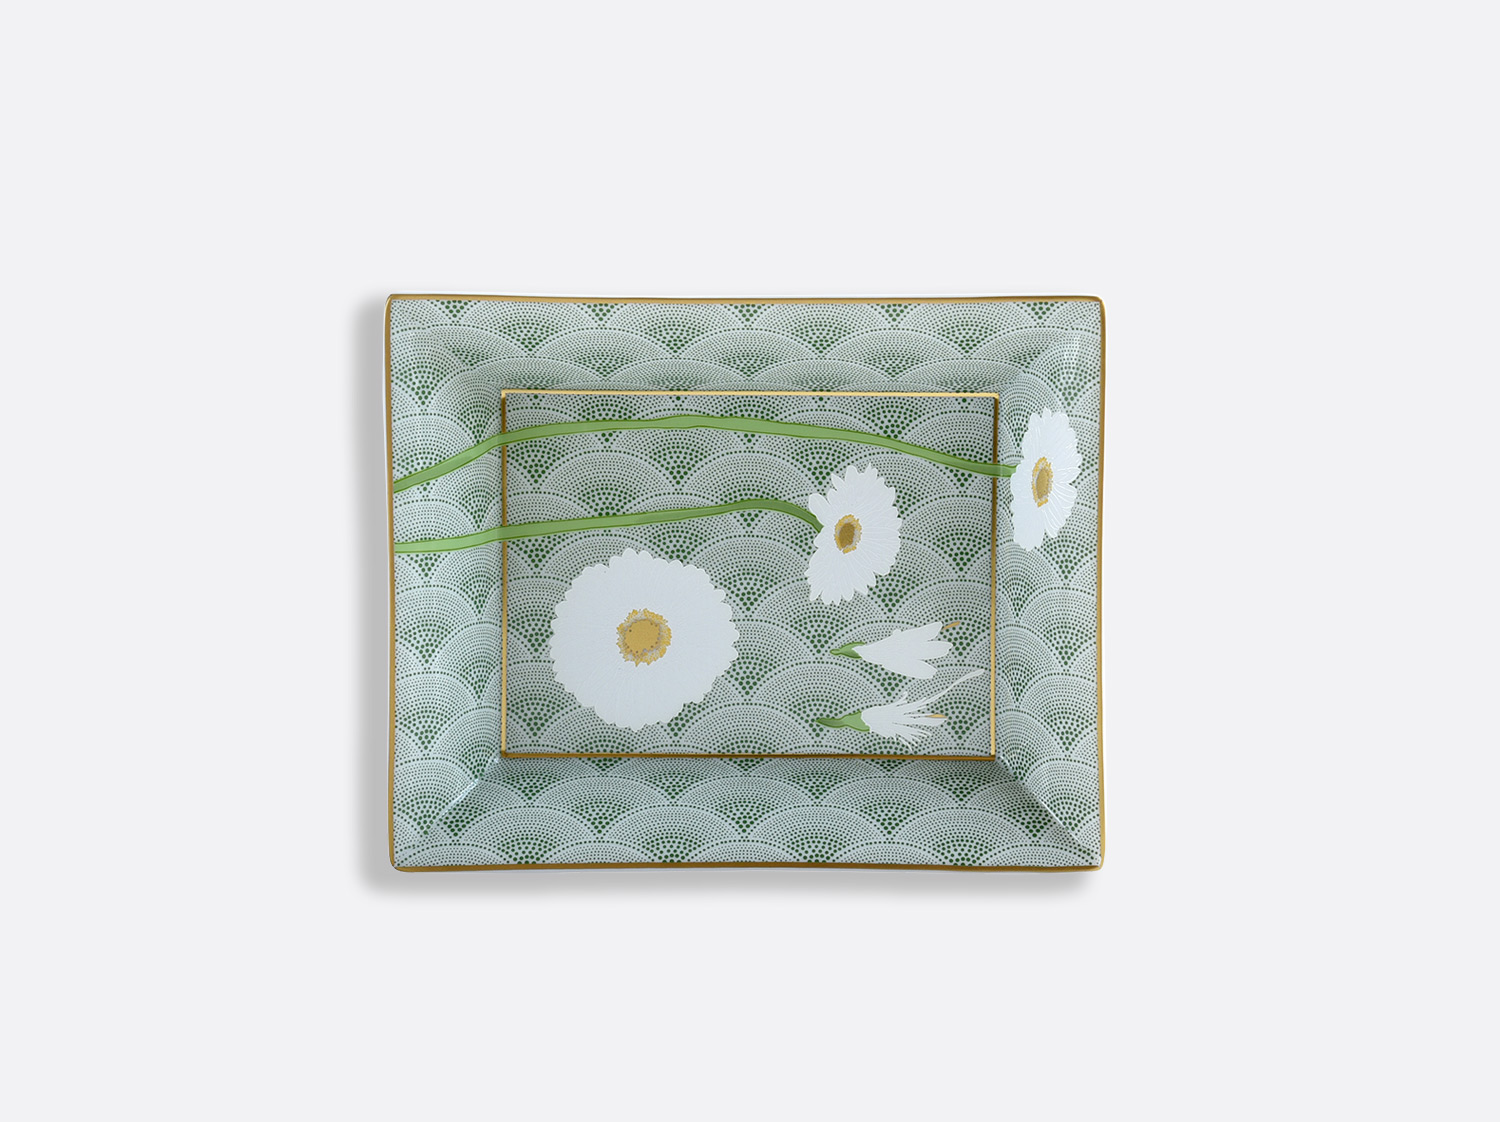 China Valet tray 7.9 x 6.3" of the collection PRAIANA | Bernardaud